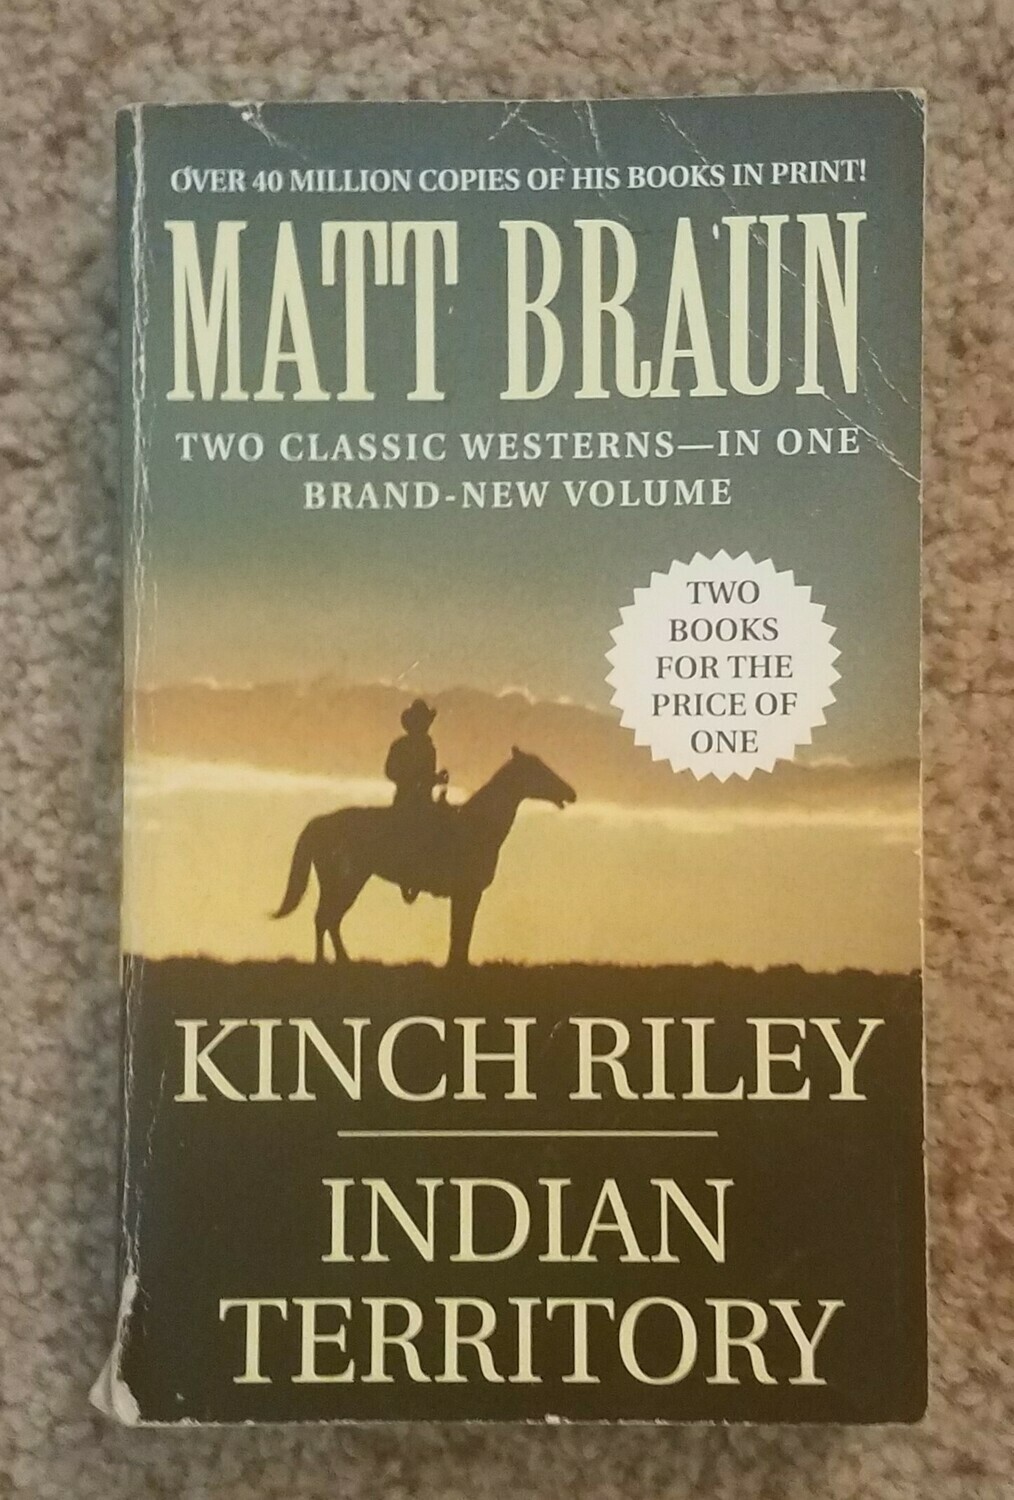 Kinch Riley: Indian Territory by Matt Braun